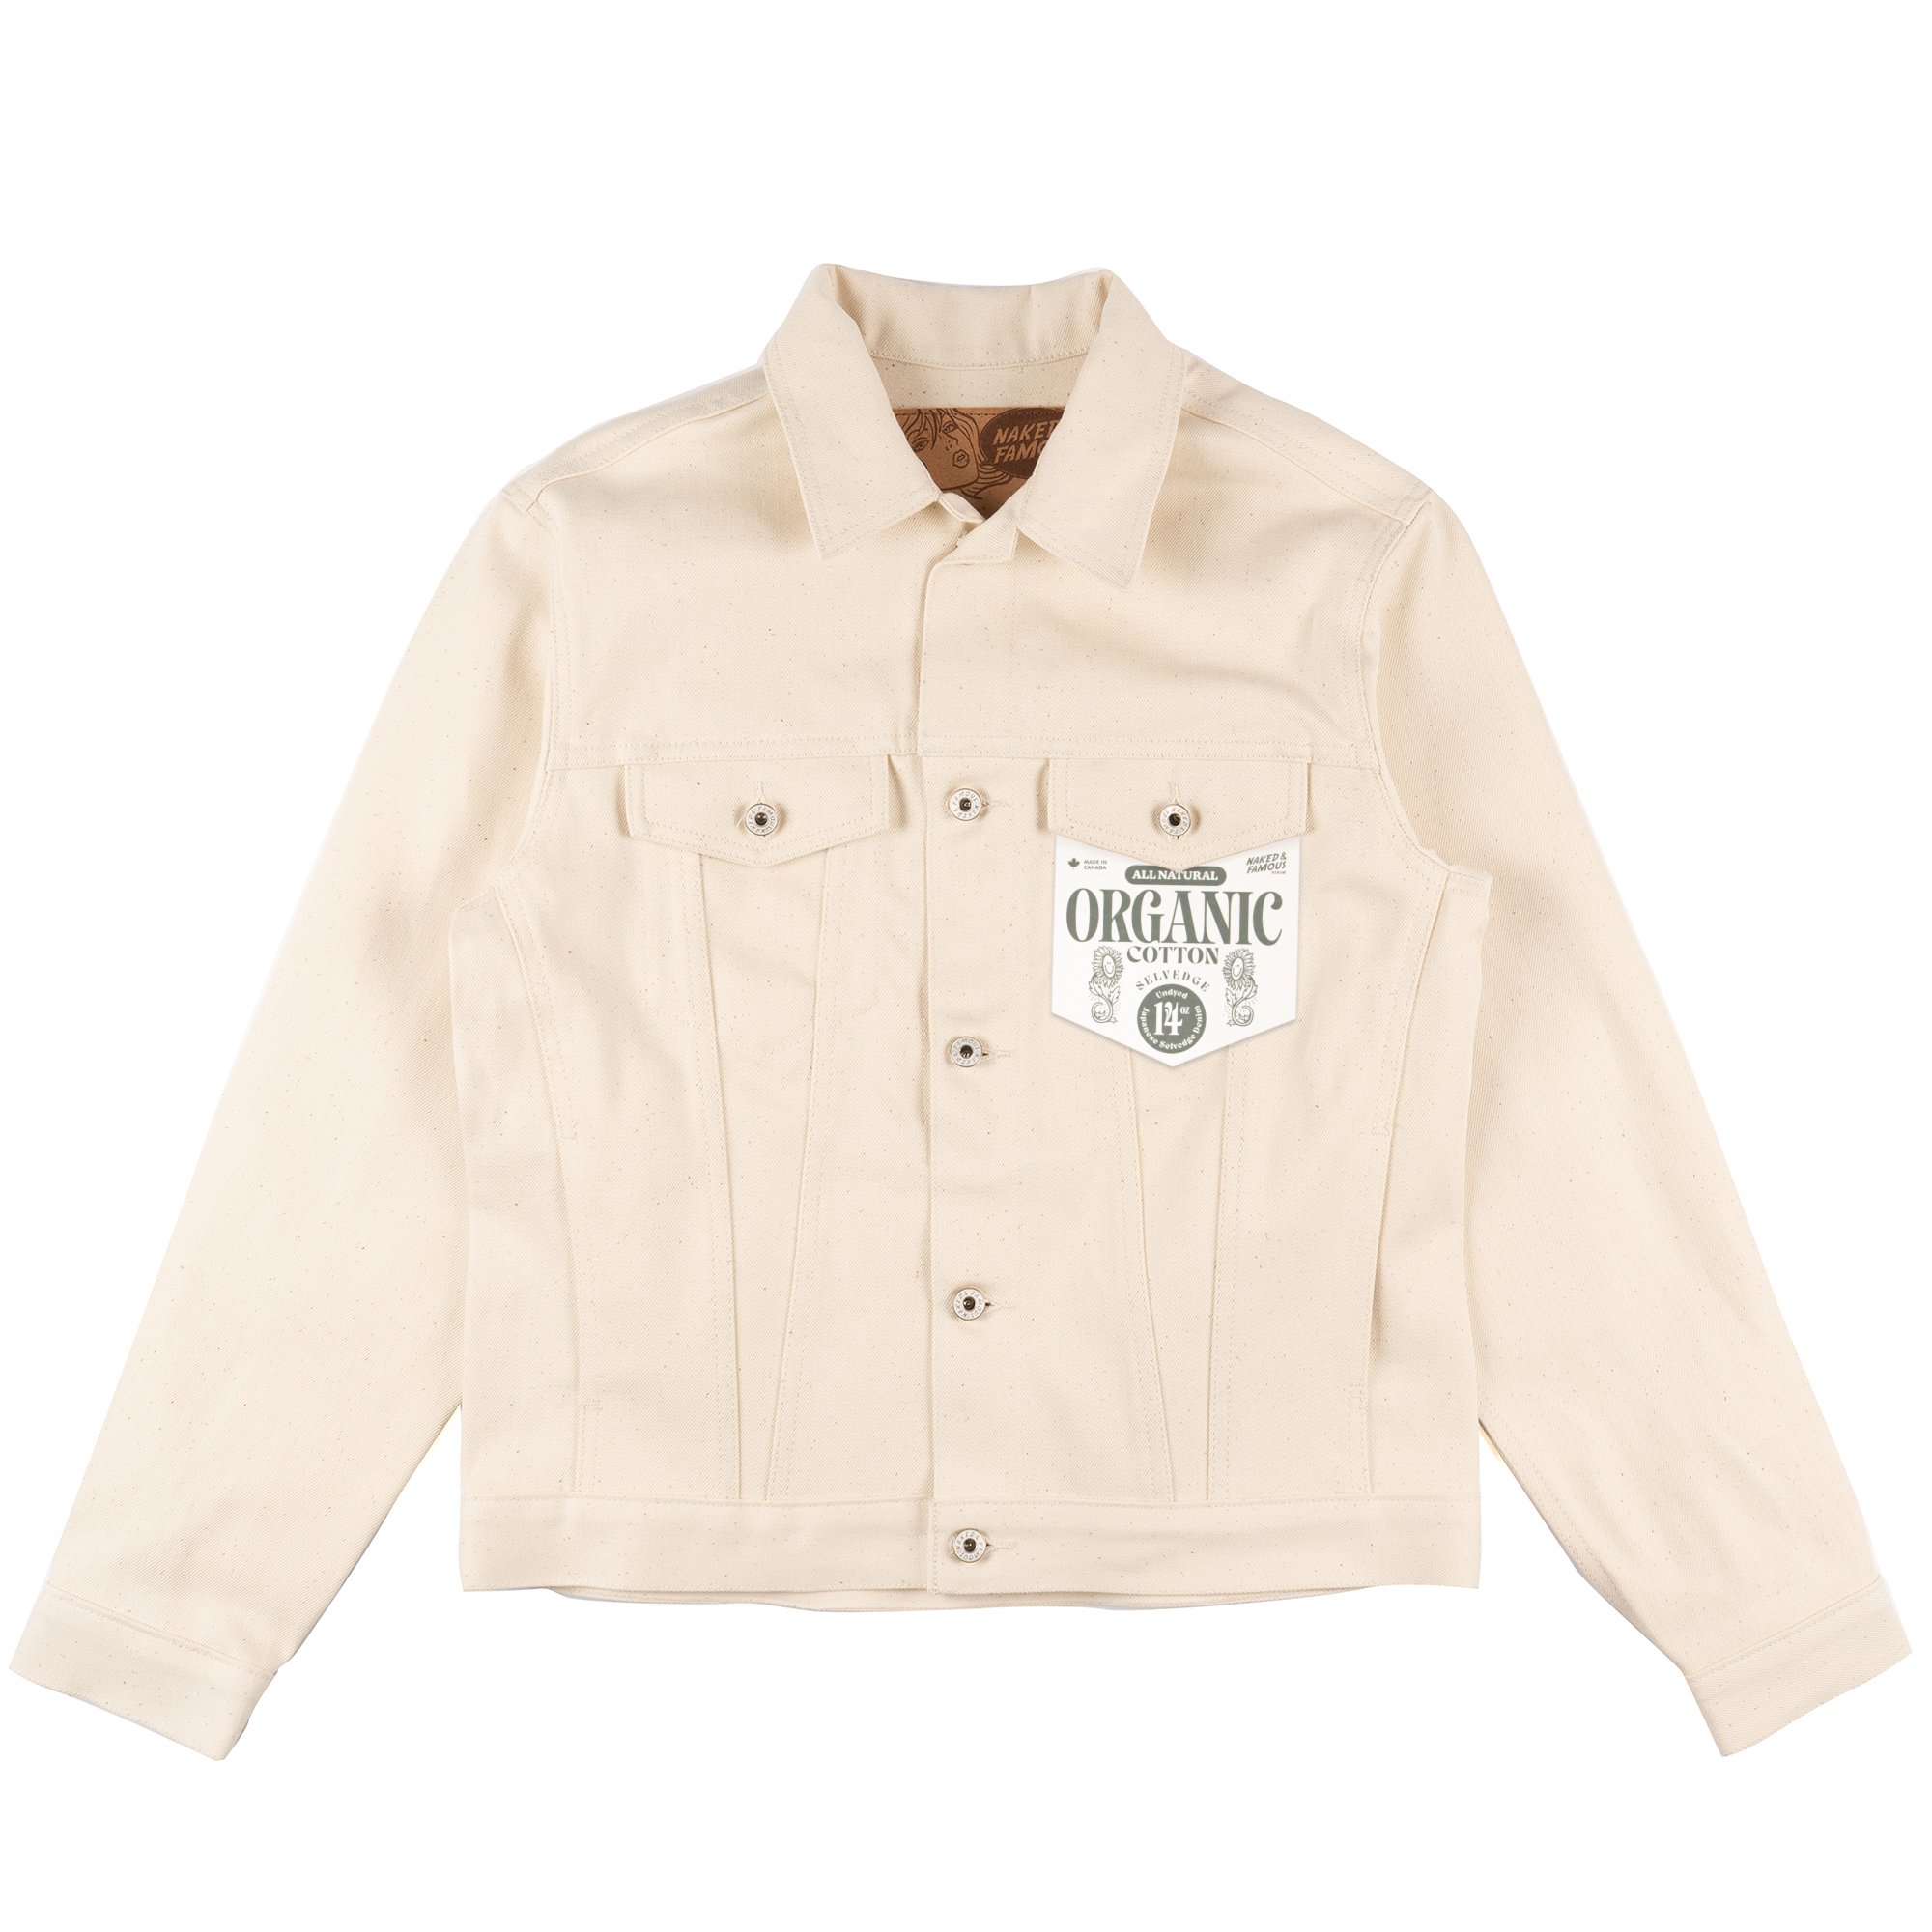  Denim Jacket - All Natural Organic Cotton Selvedge - flat front 